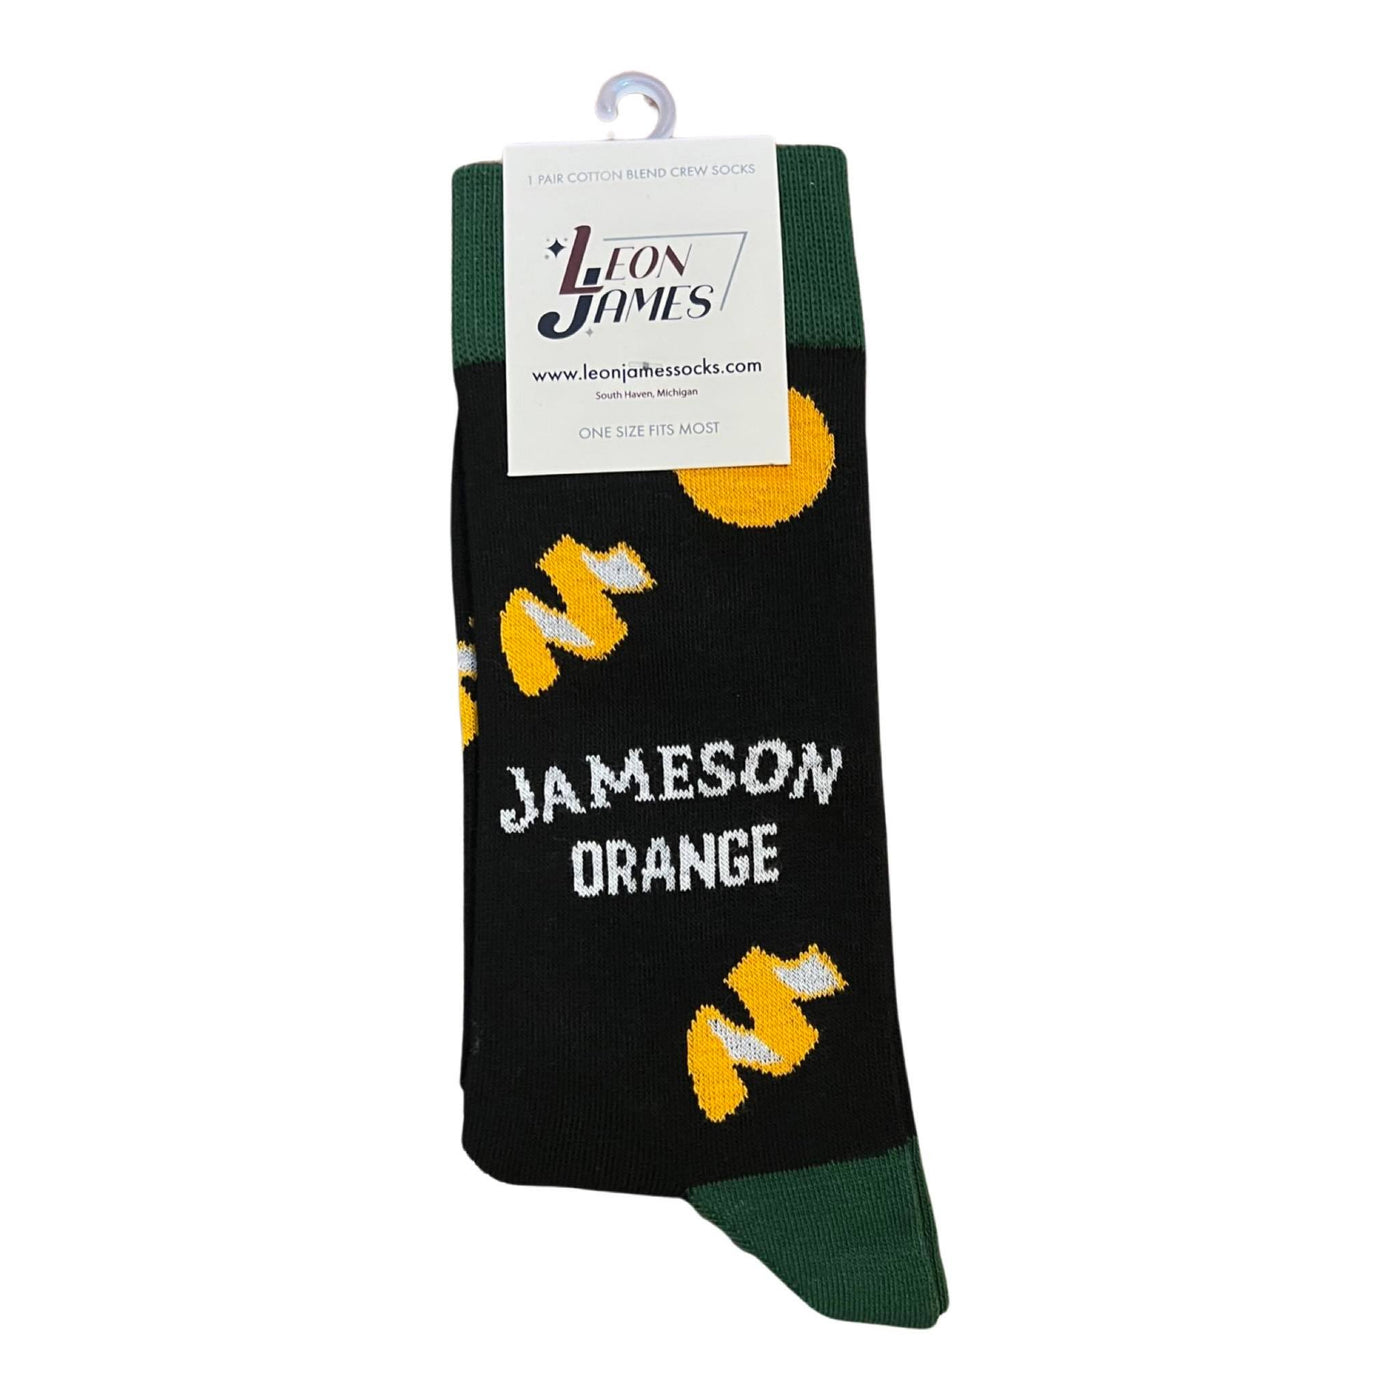 Jameson Orange Whiskey Crew Socks 3